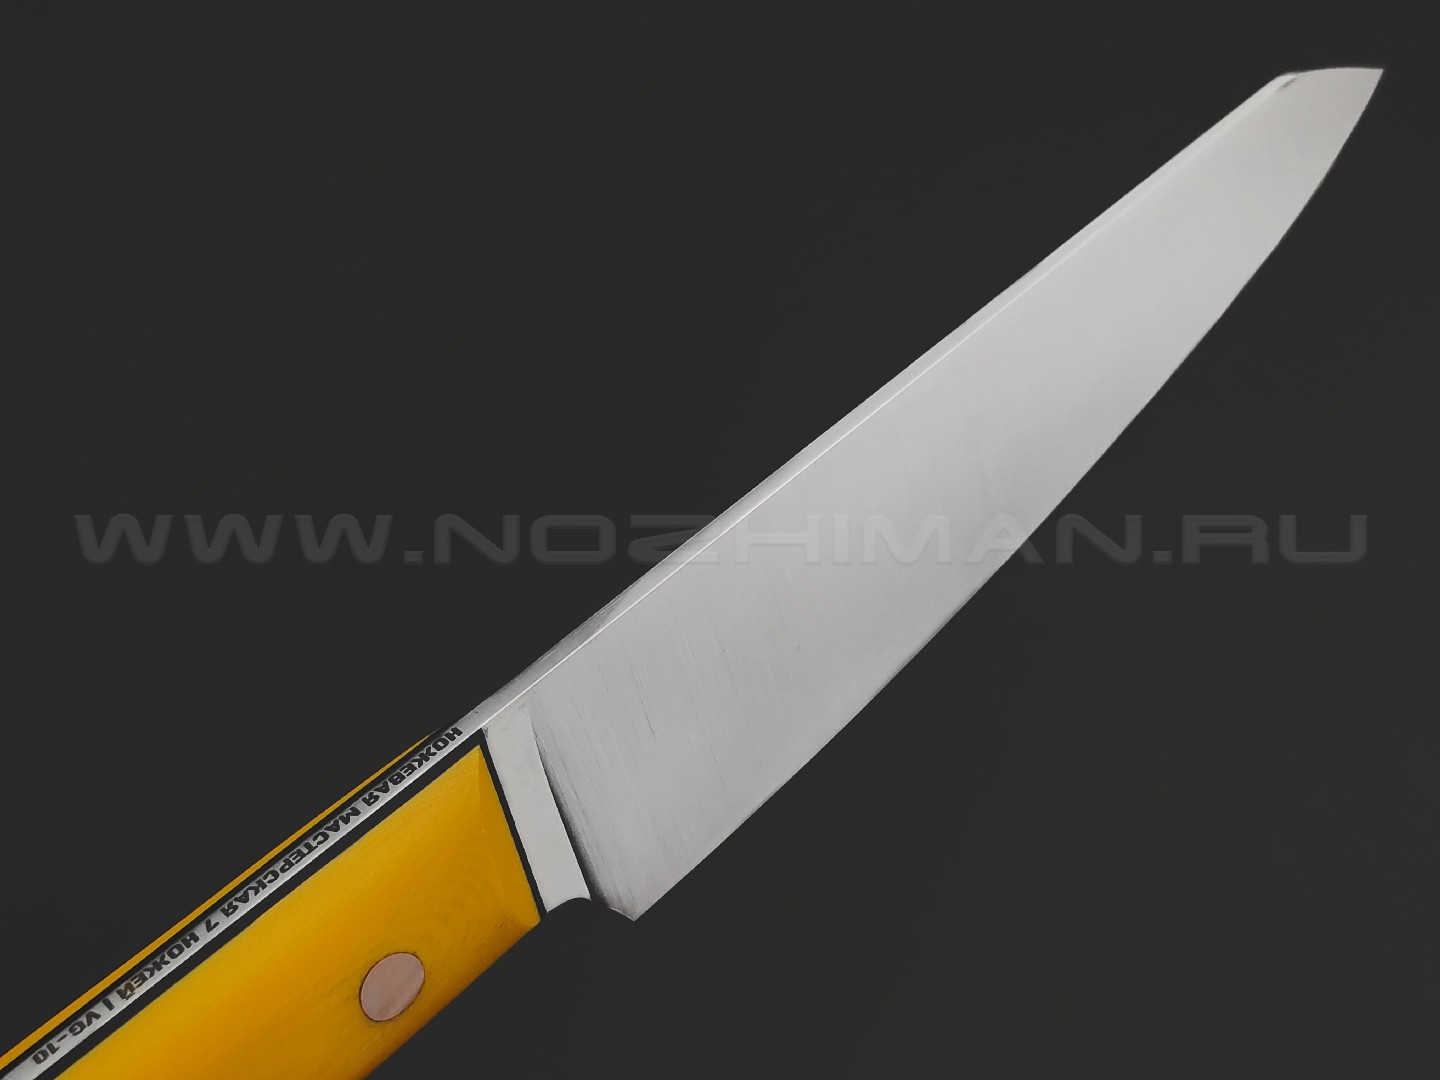 7 ножей нож Су-шеф сталь VG-10 satin, рукоять G10 yellow